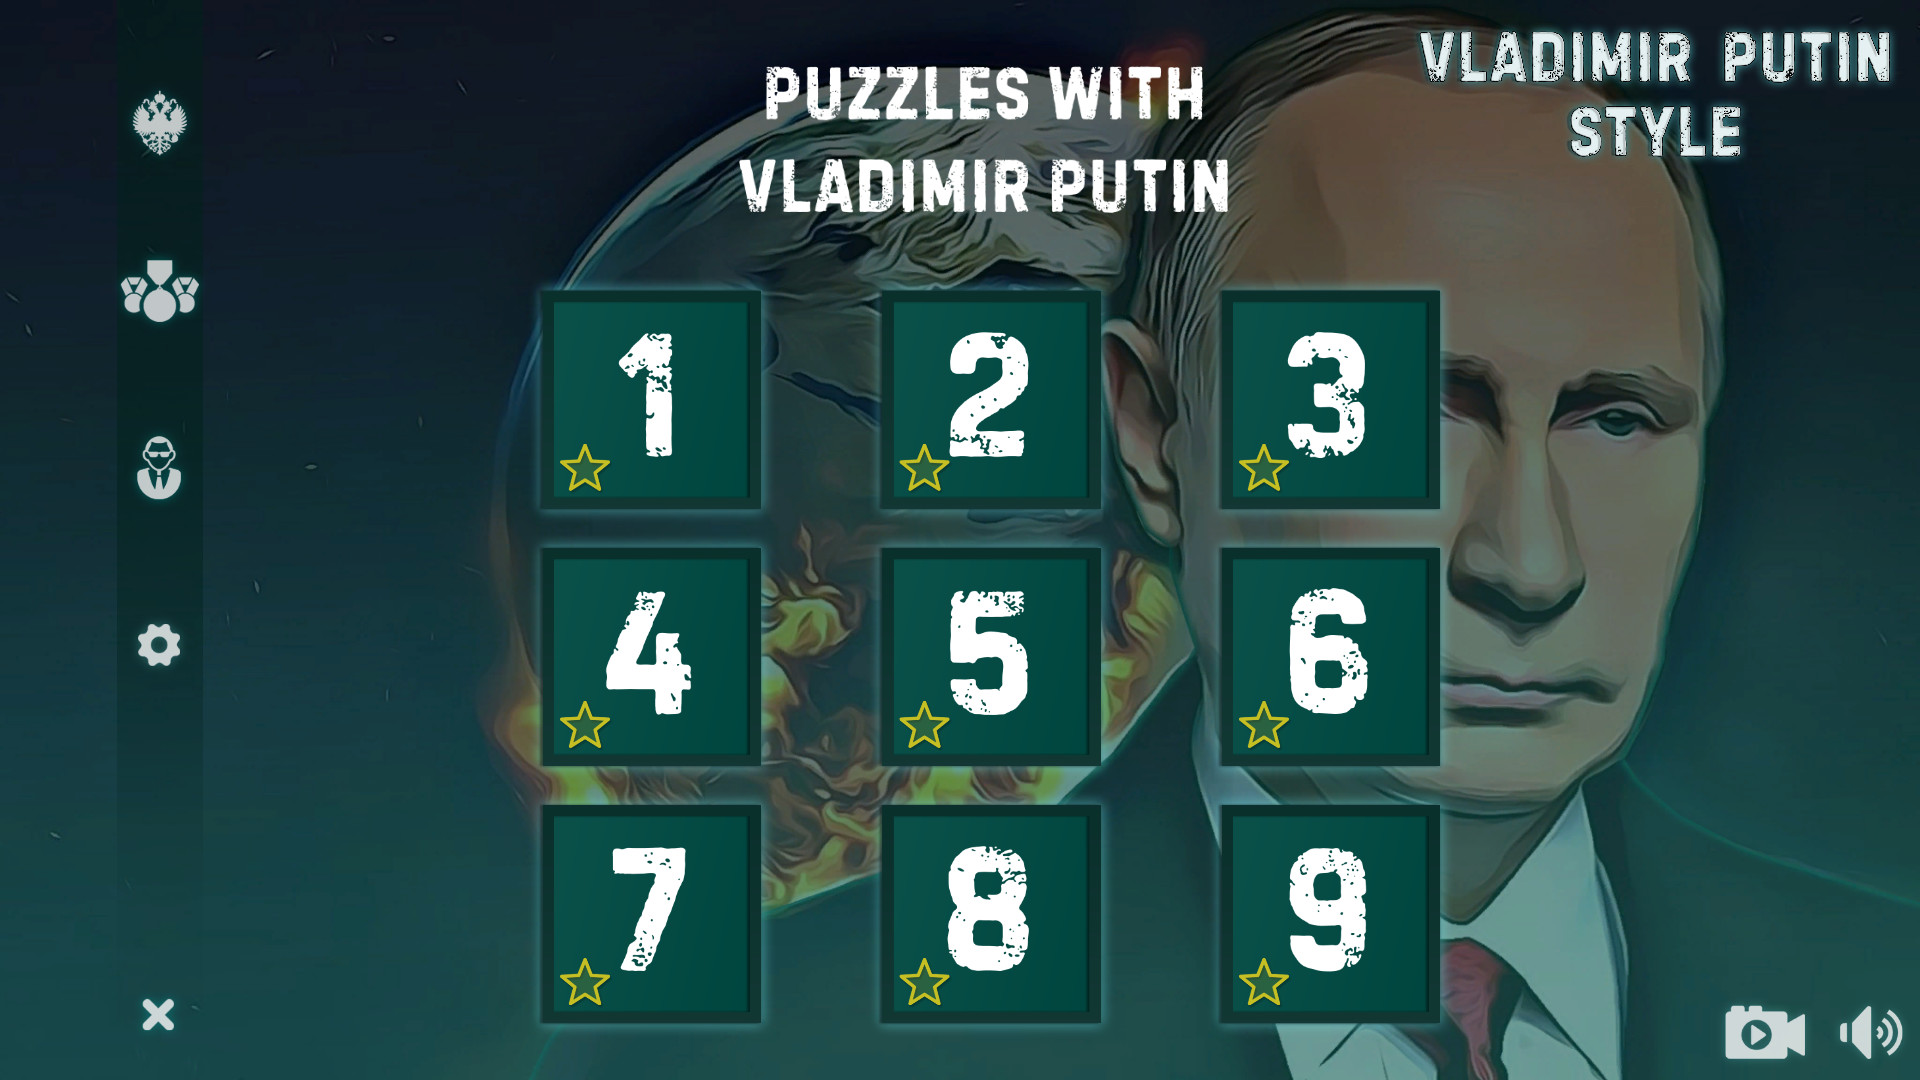 Vladimir Putin Style screenshot